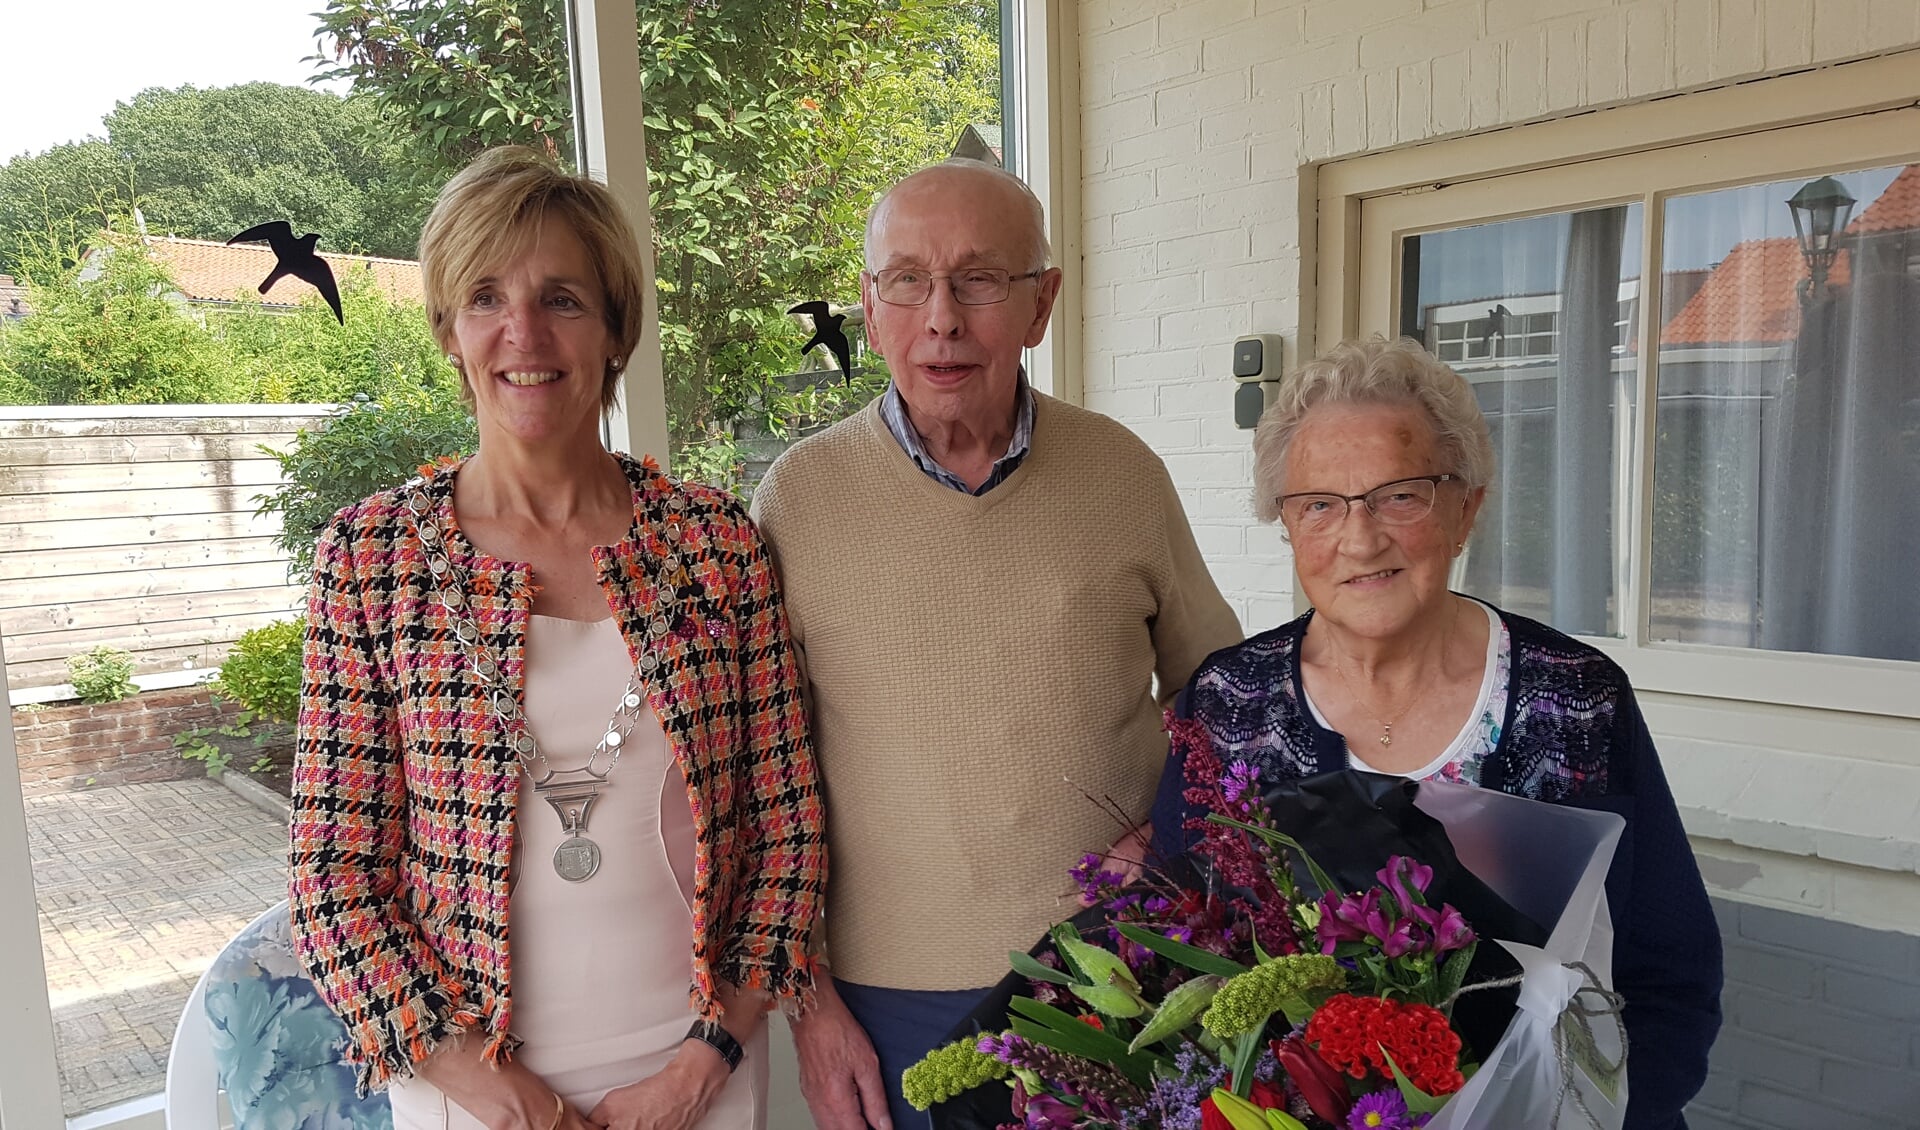 Burgemeester Bronsvoort brengt een prachtige bos bloemen mee voor het 65-jarig bruidspaar Gerard en Trees Meekes-Schuurmans. Foto: Kyra Broshuis